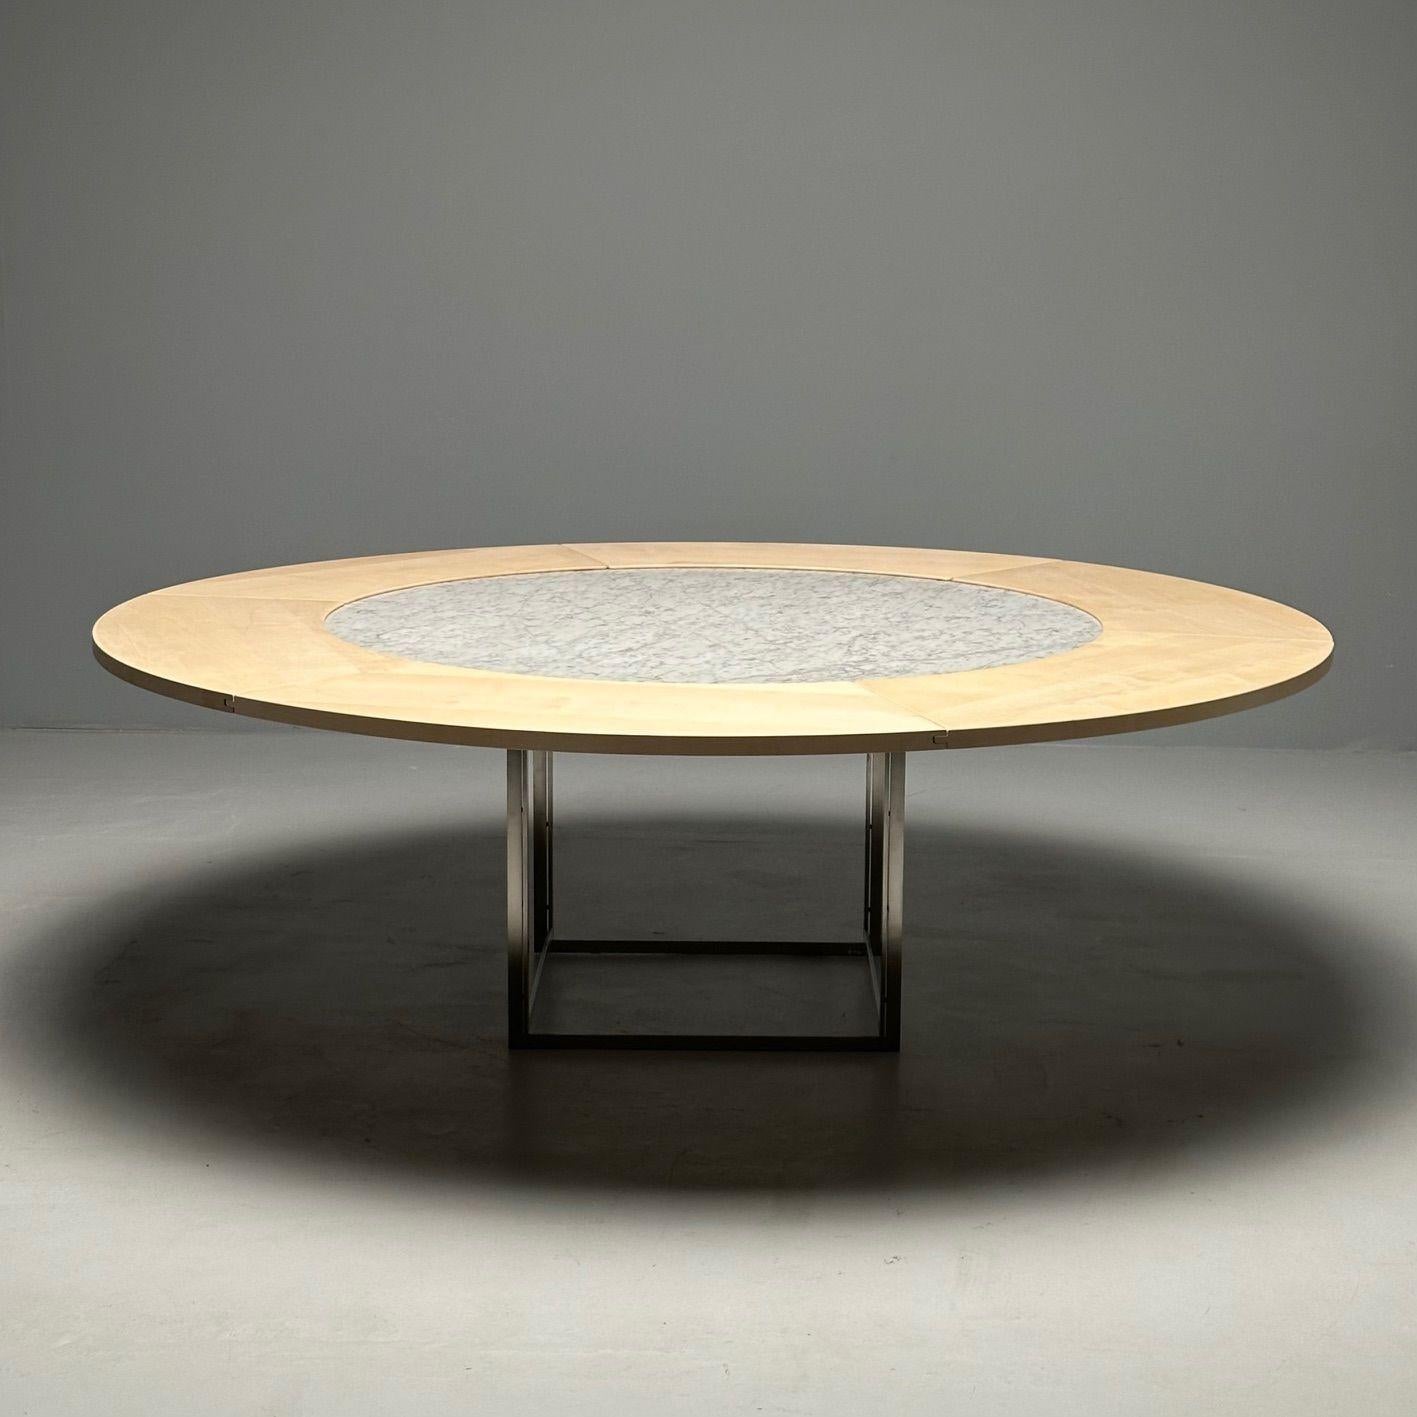 Poul Kjaerholm Mid-Century Modern PK-54 Dining Table, Marble, Maple, Steel, 2011 For Sale 2